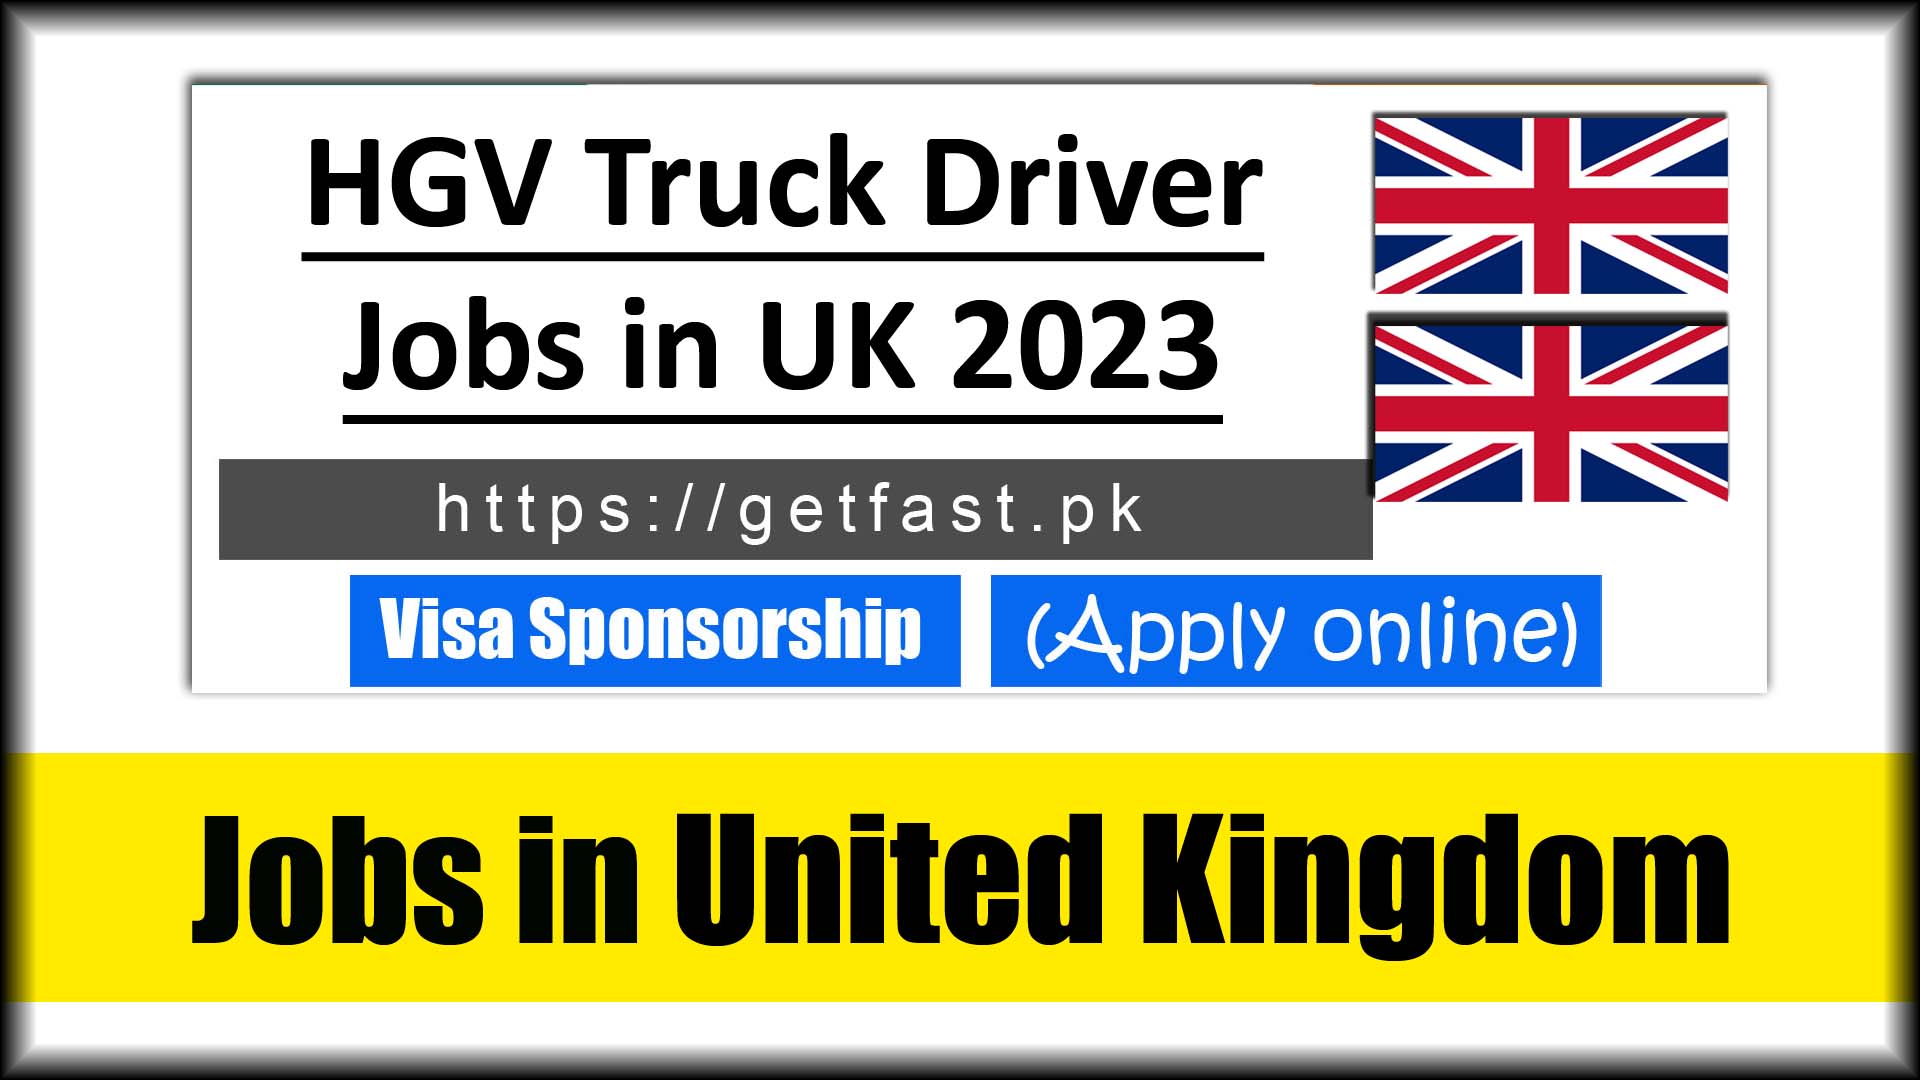 HGV Truck Driver Jobs in UK 2023 with Visa Sponsorship (Apply Online)